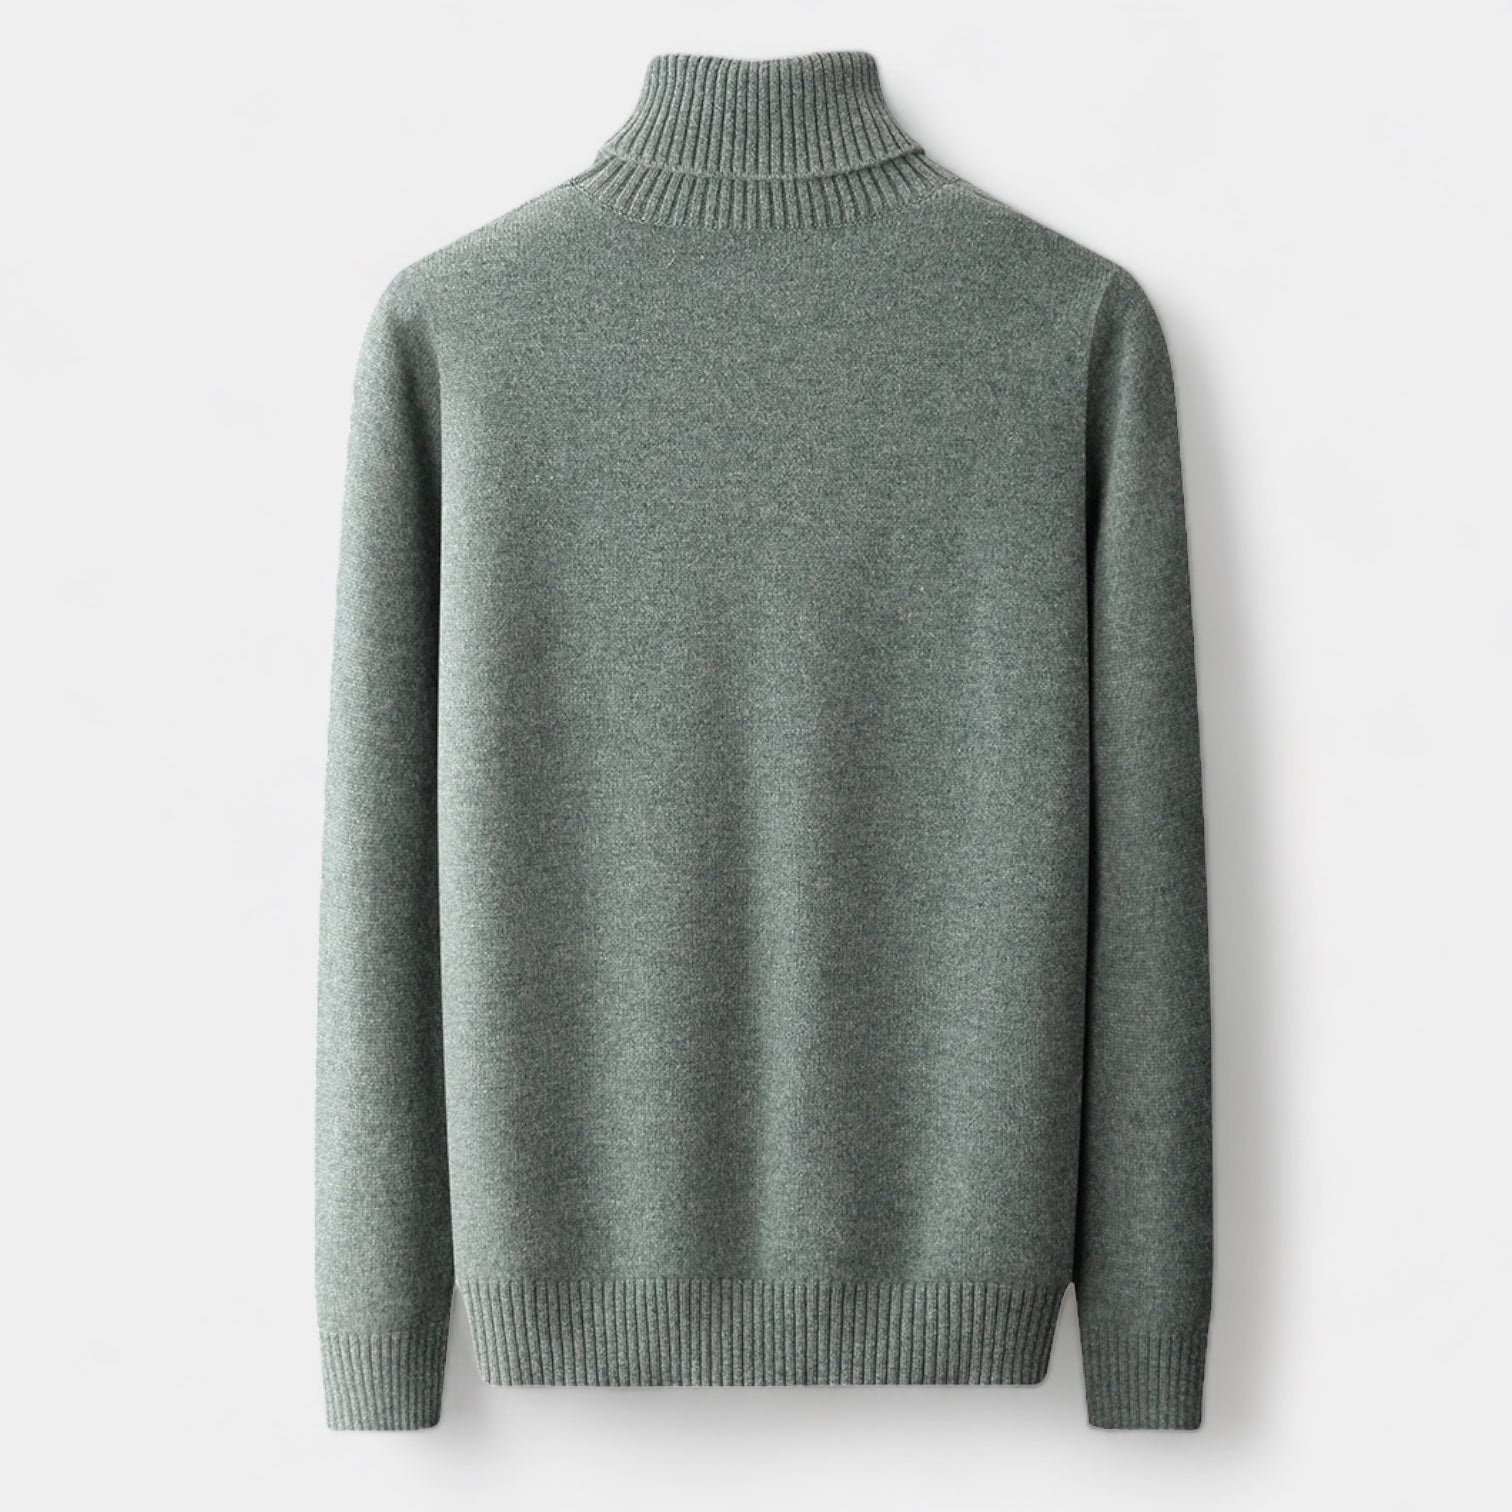 OLD MONEY Merino Wool Turtleneck Sweater